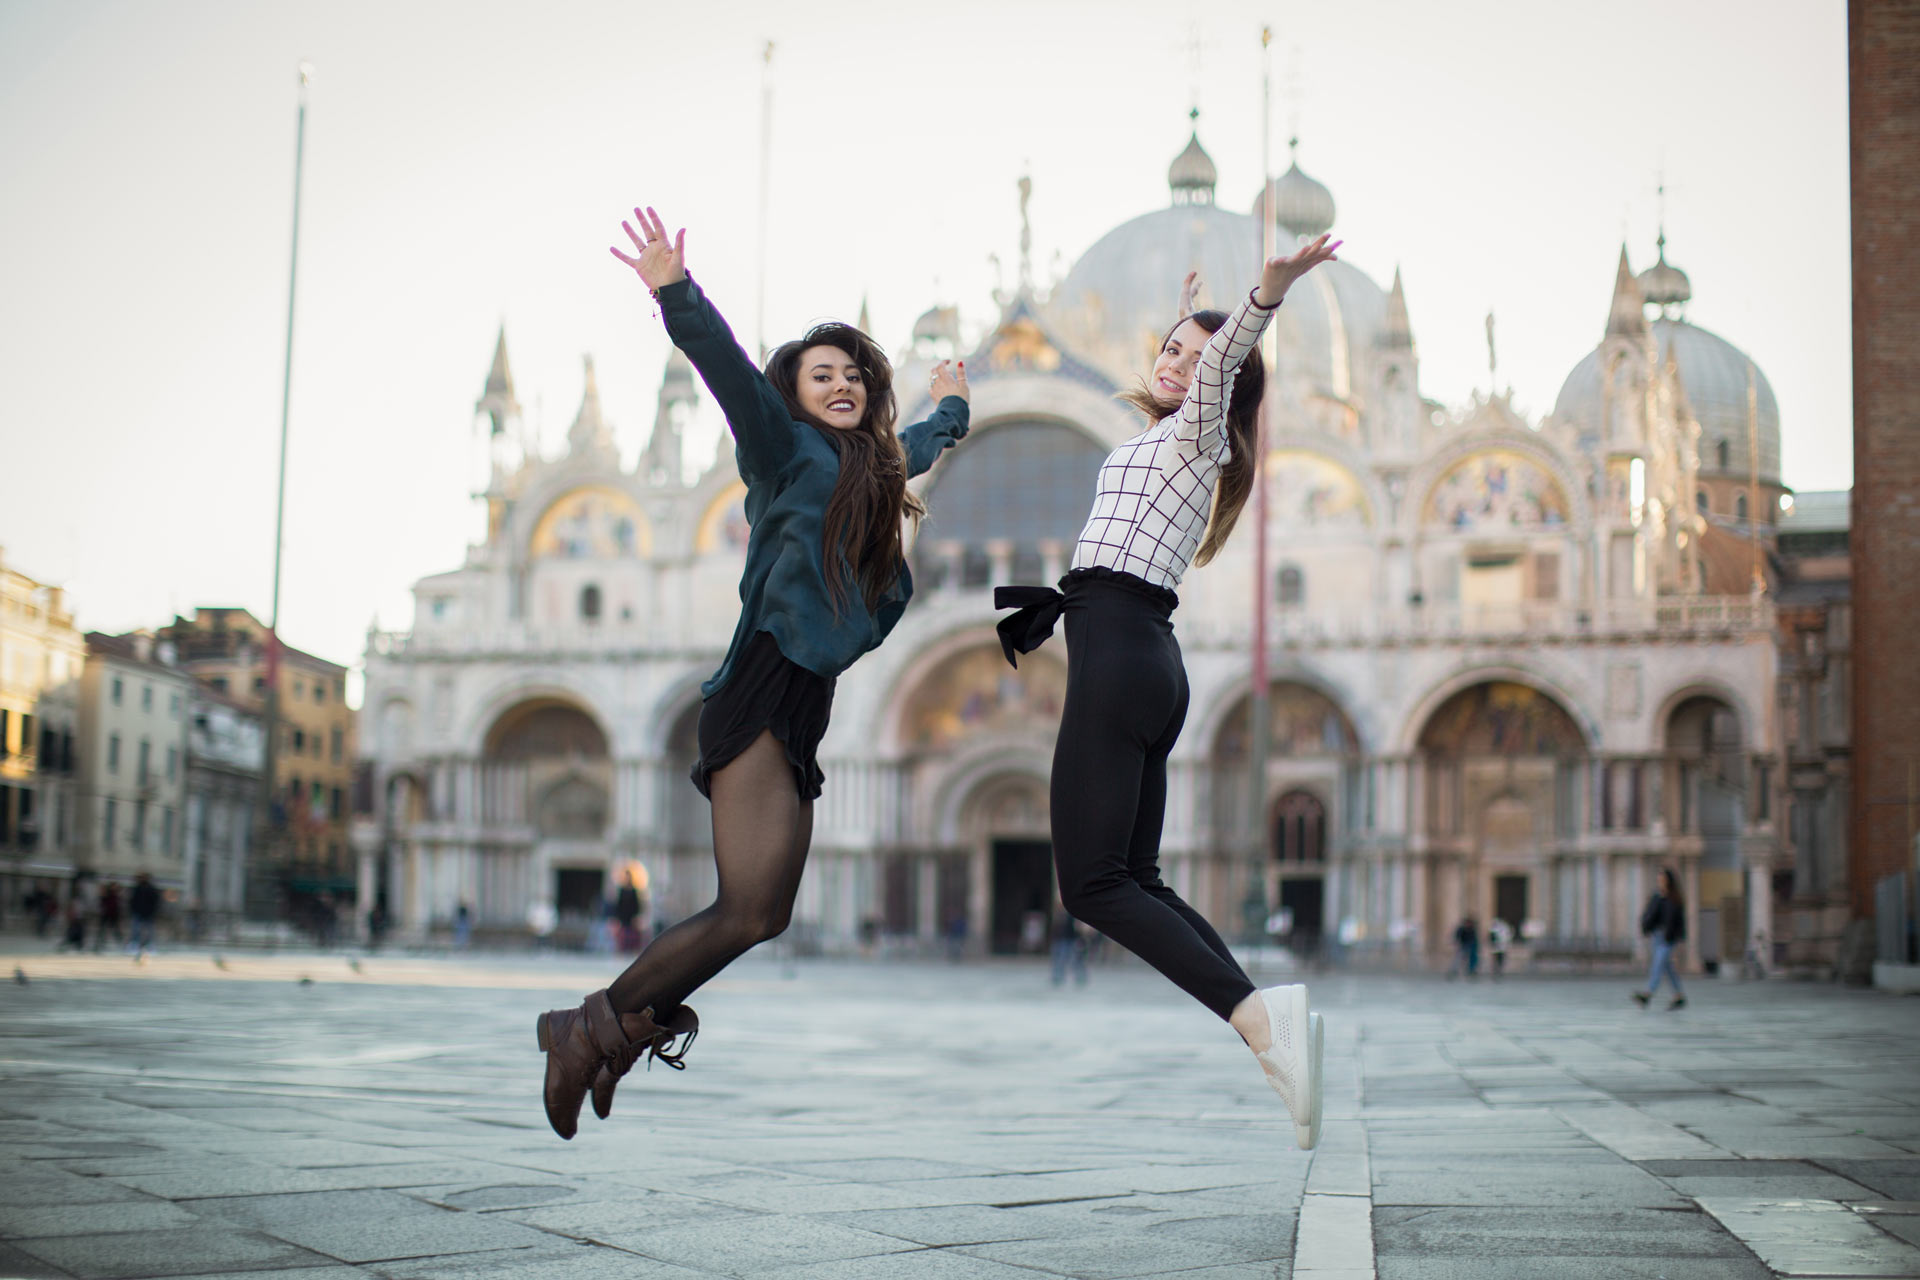 Venice-Ashley-Meagan-Piazza-San-Marco-jump